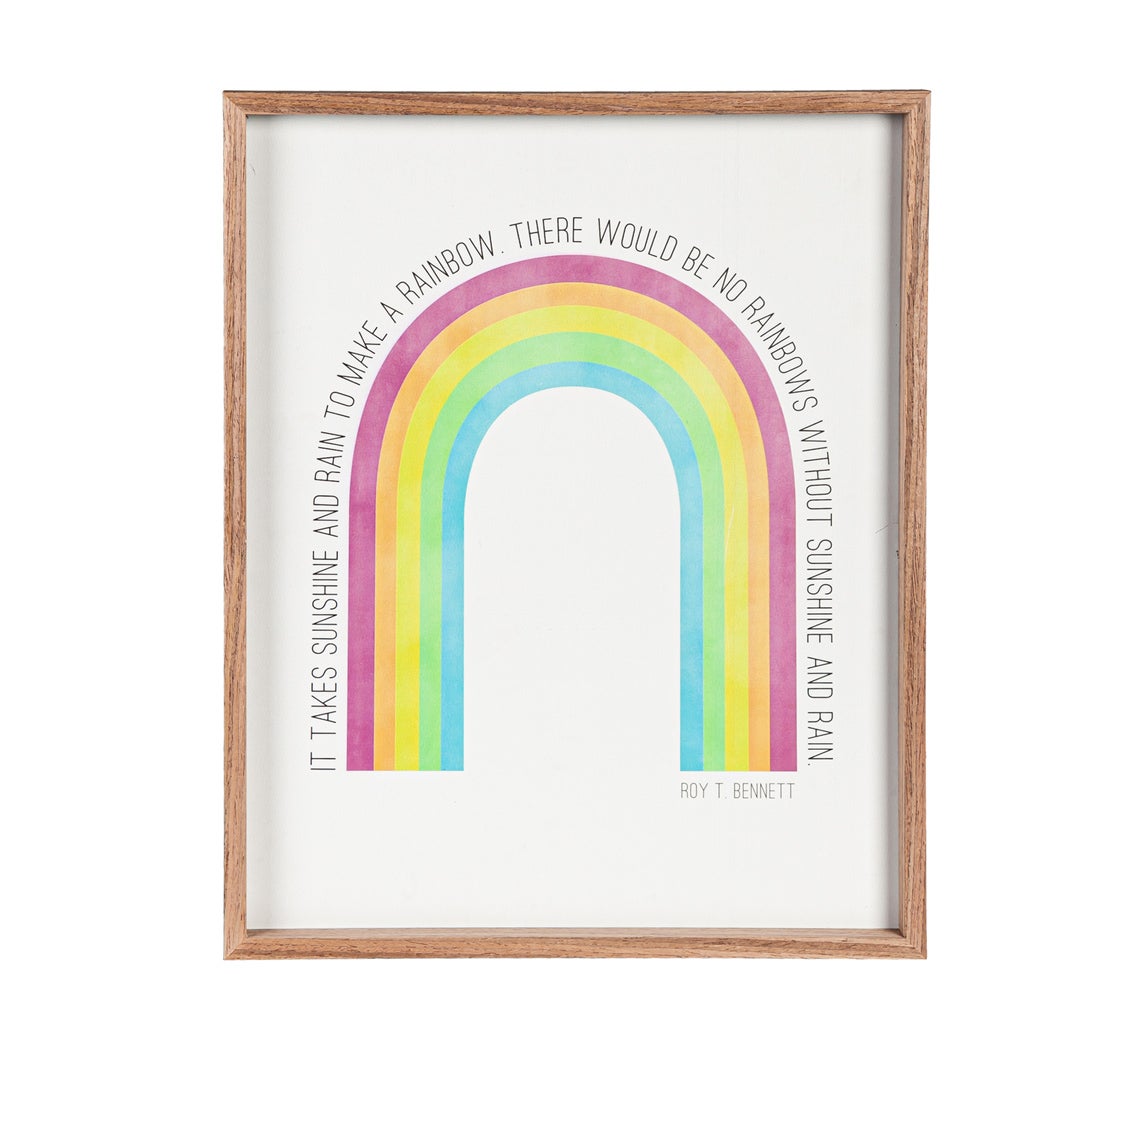 16" x 20" Framed Wood Wall Art Inspirational Rainbow